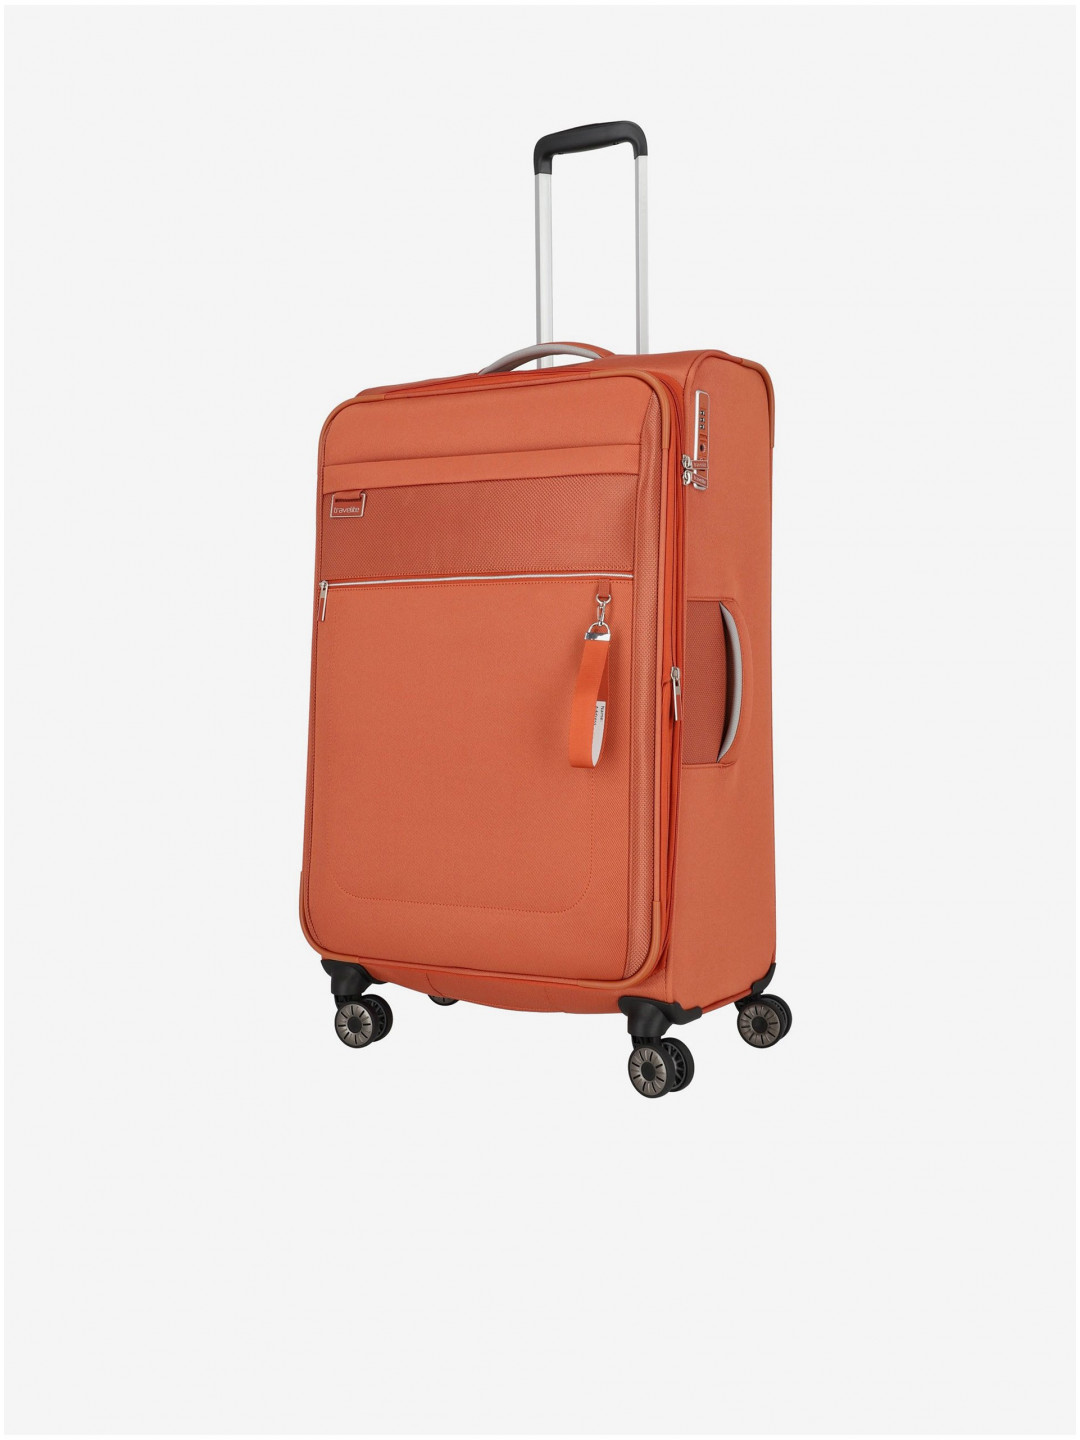 Oranžový cestovní kufr Travelite Miigo 4w L Copper chutney